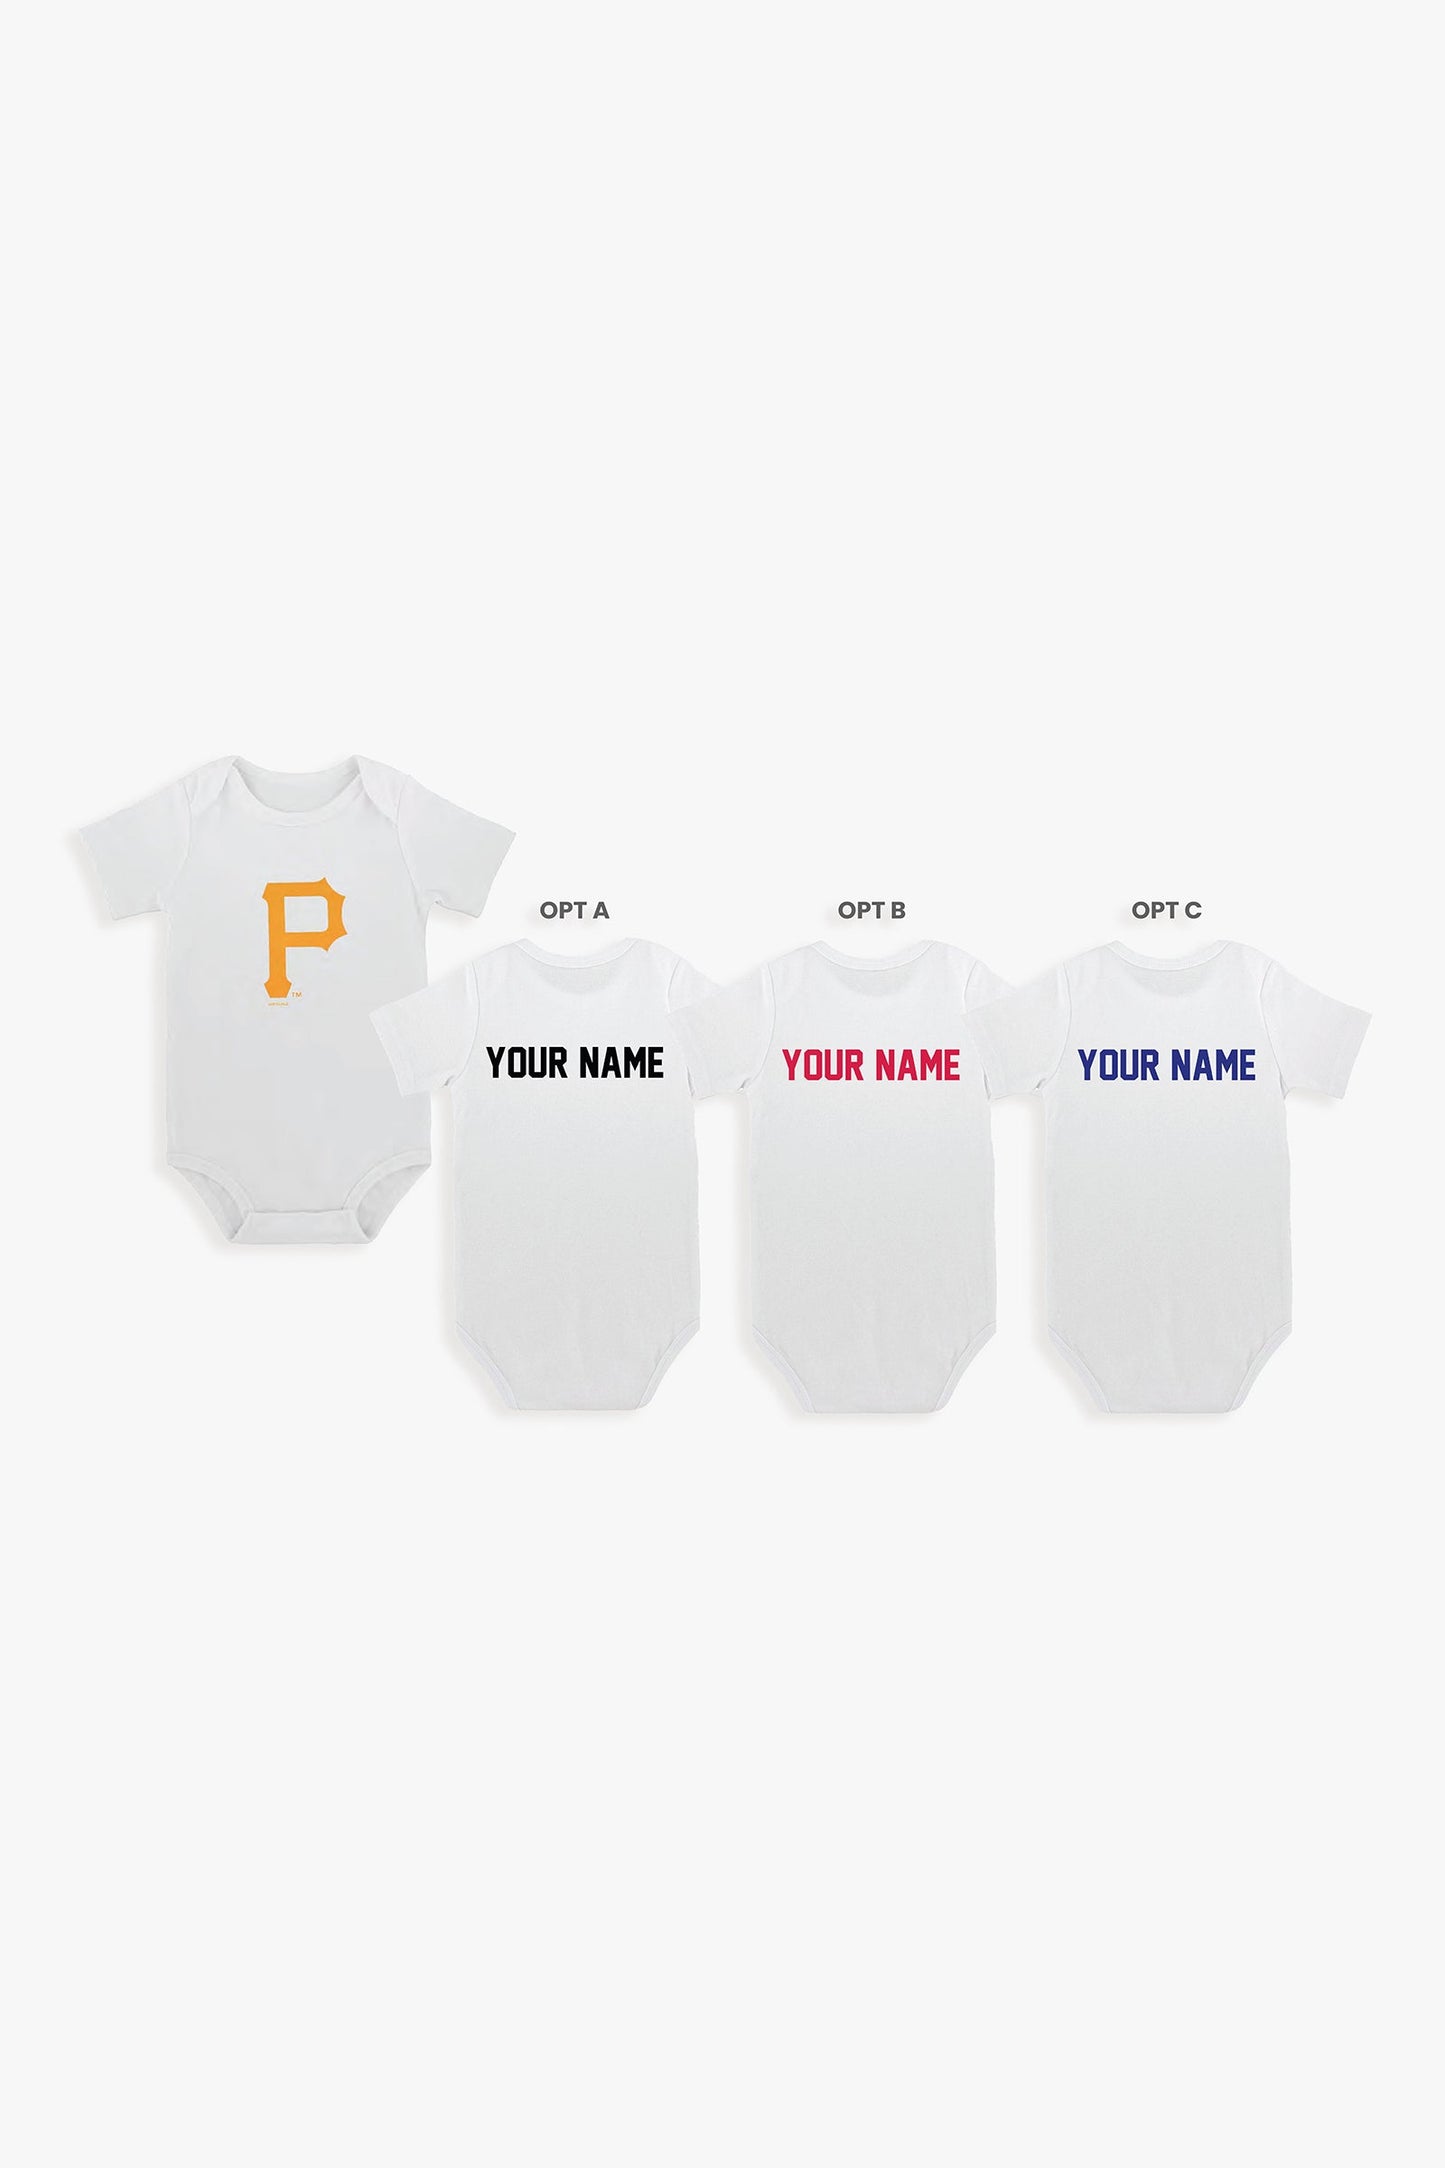 Customizable MLB Baby Bodysuit in White (12-18 Months)